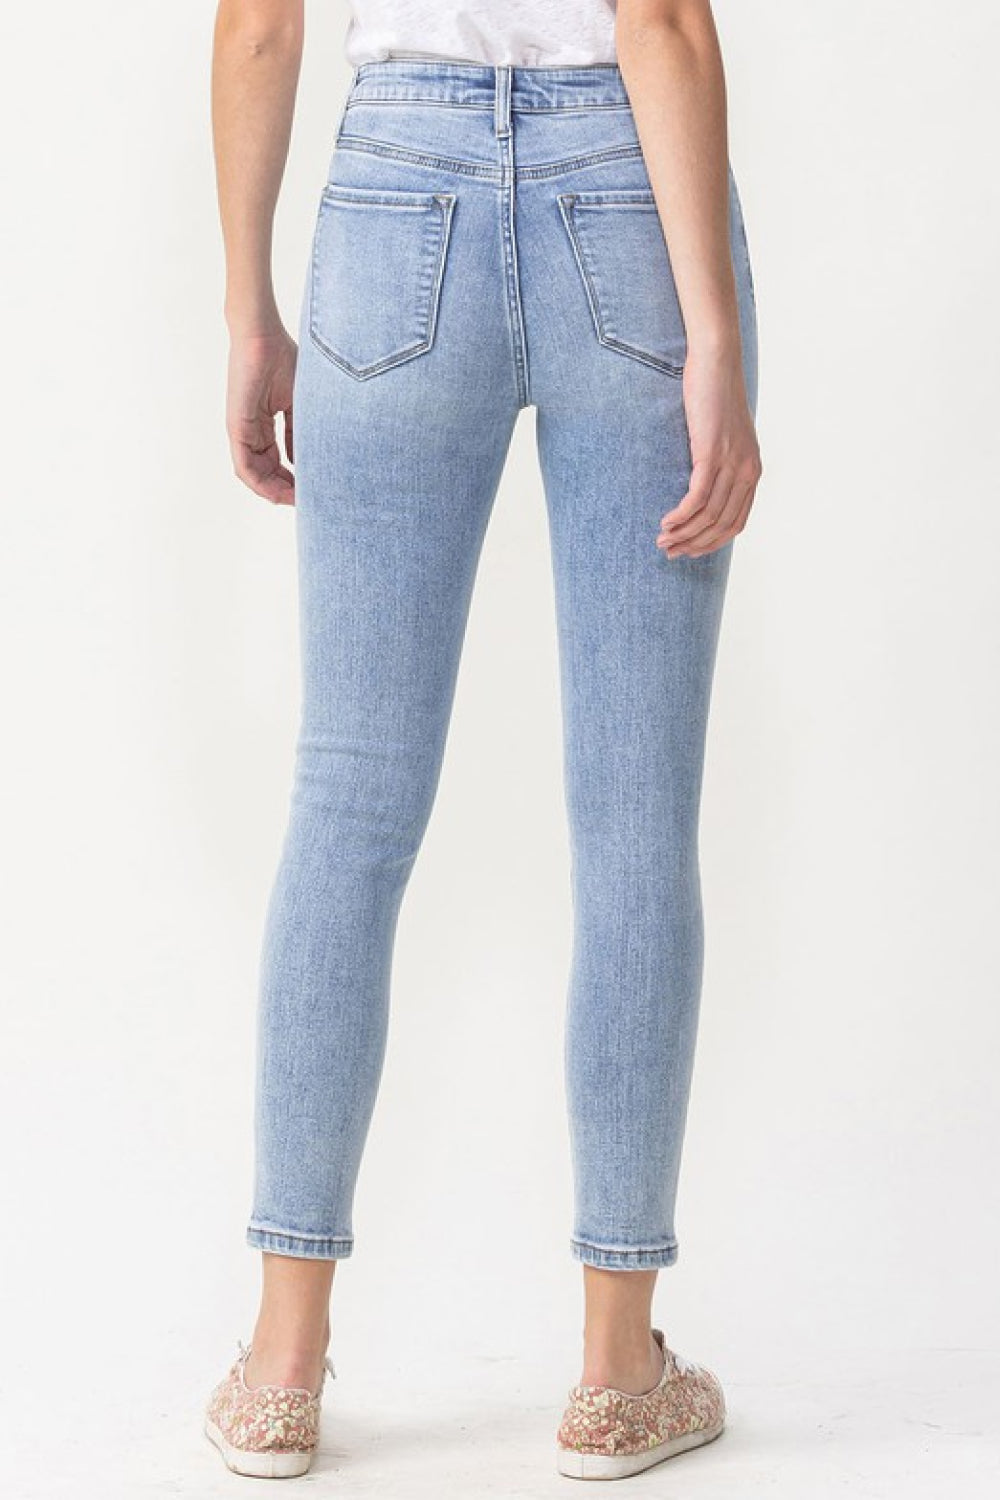 Lovervet Full Size Talia High Rise Crop Skinny Jeans - DromedarShop.com Online Boutique